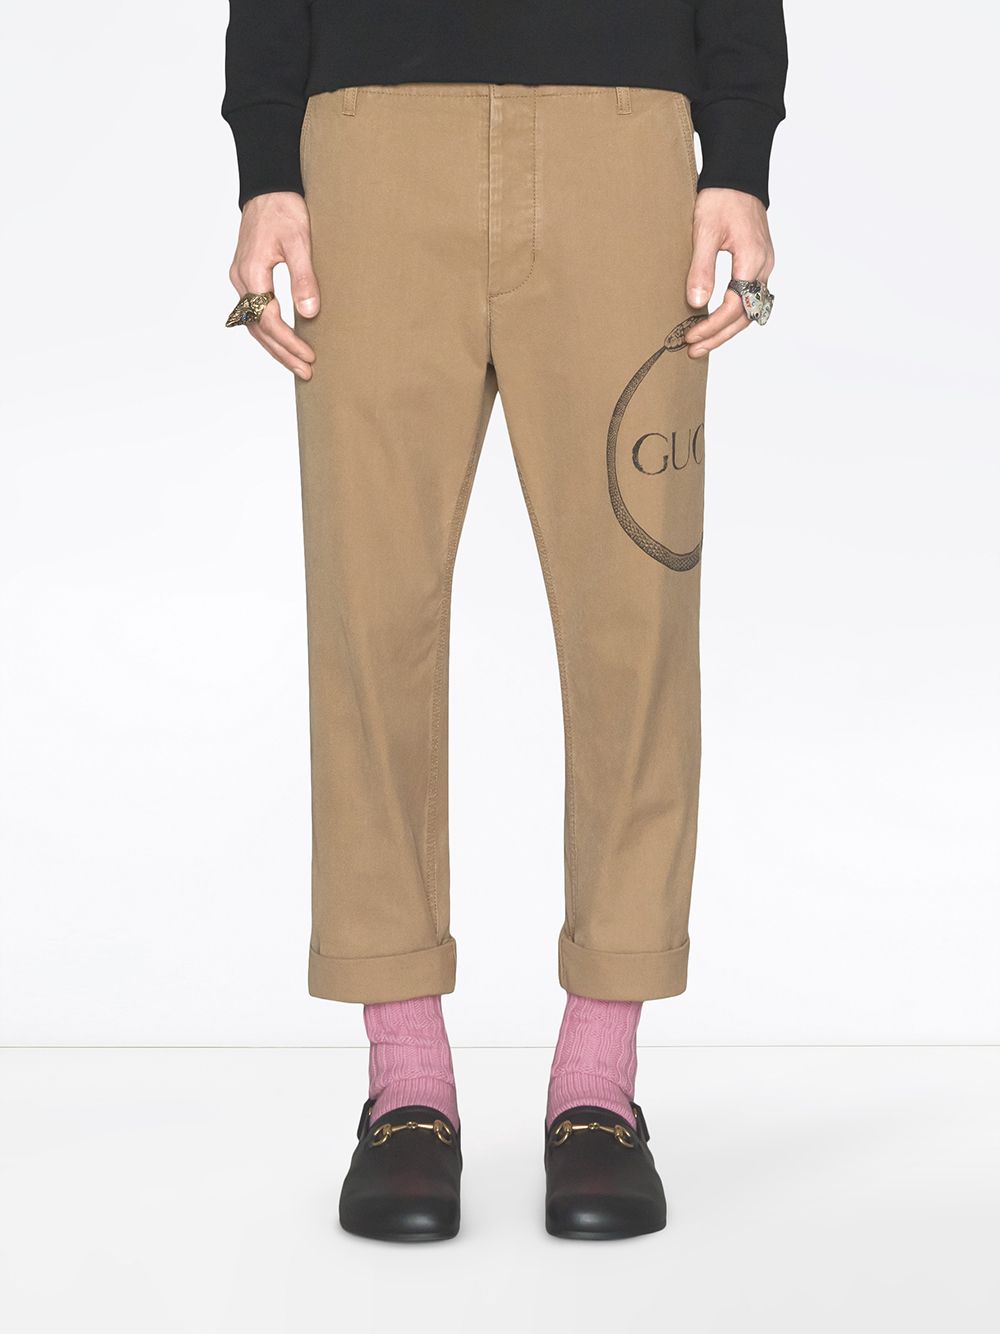 фото Gucci брюки чинос с принтом ouroboros